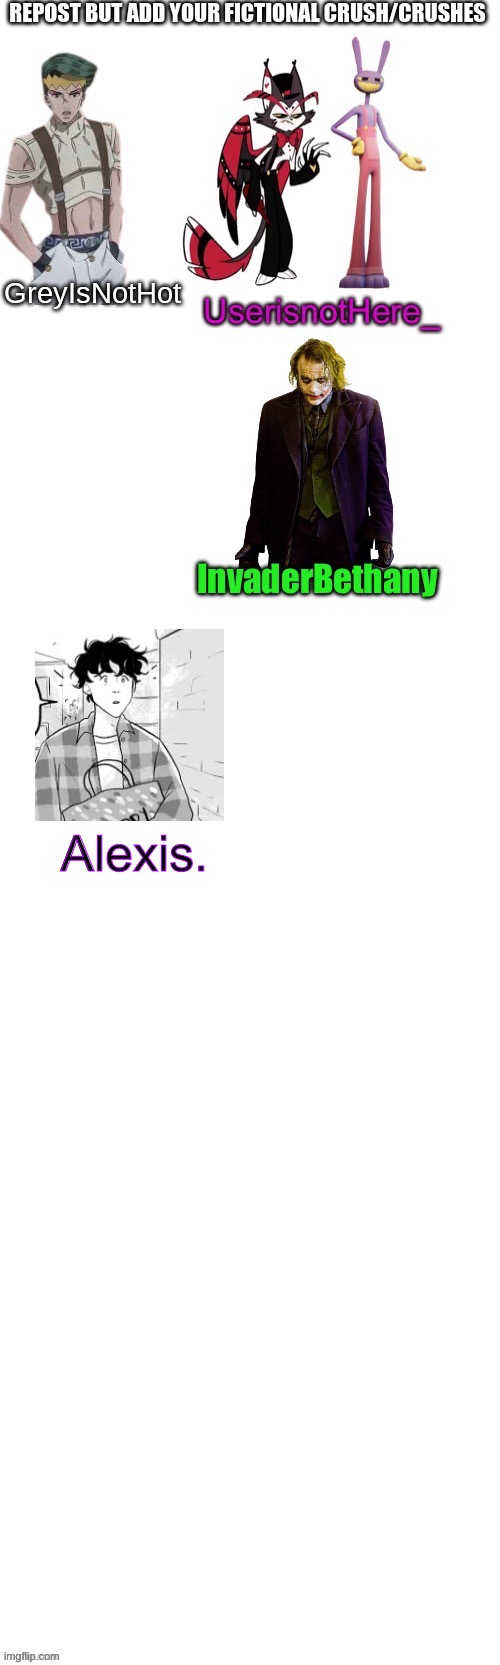 Alexis. | made w/ Imgflip meme maker